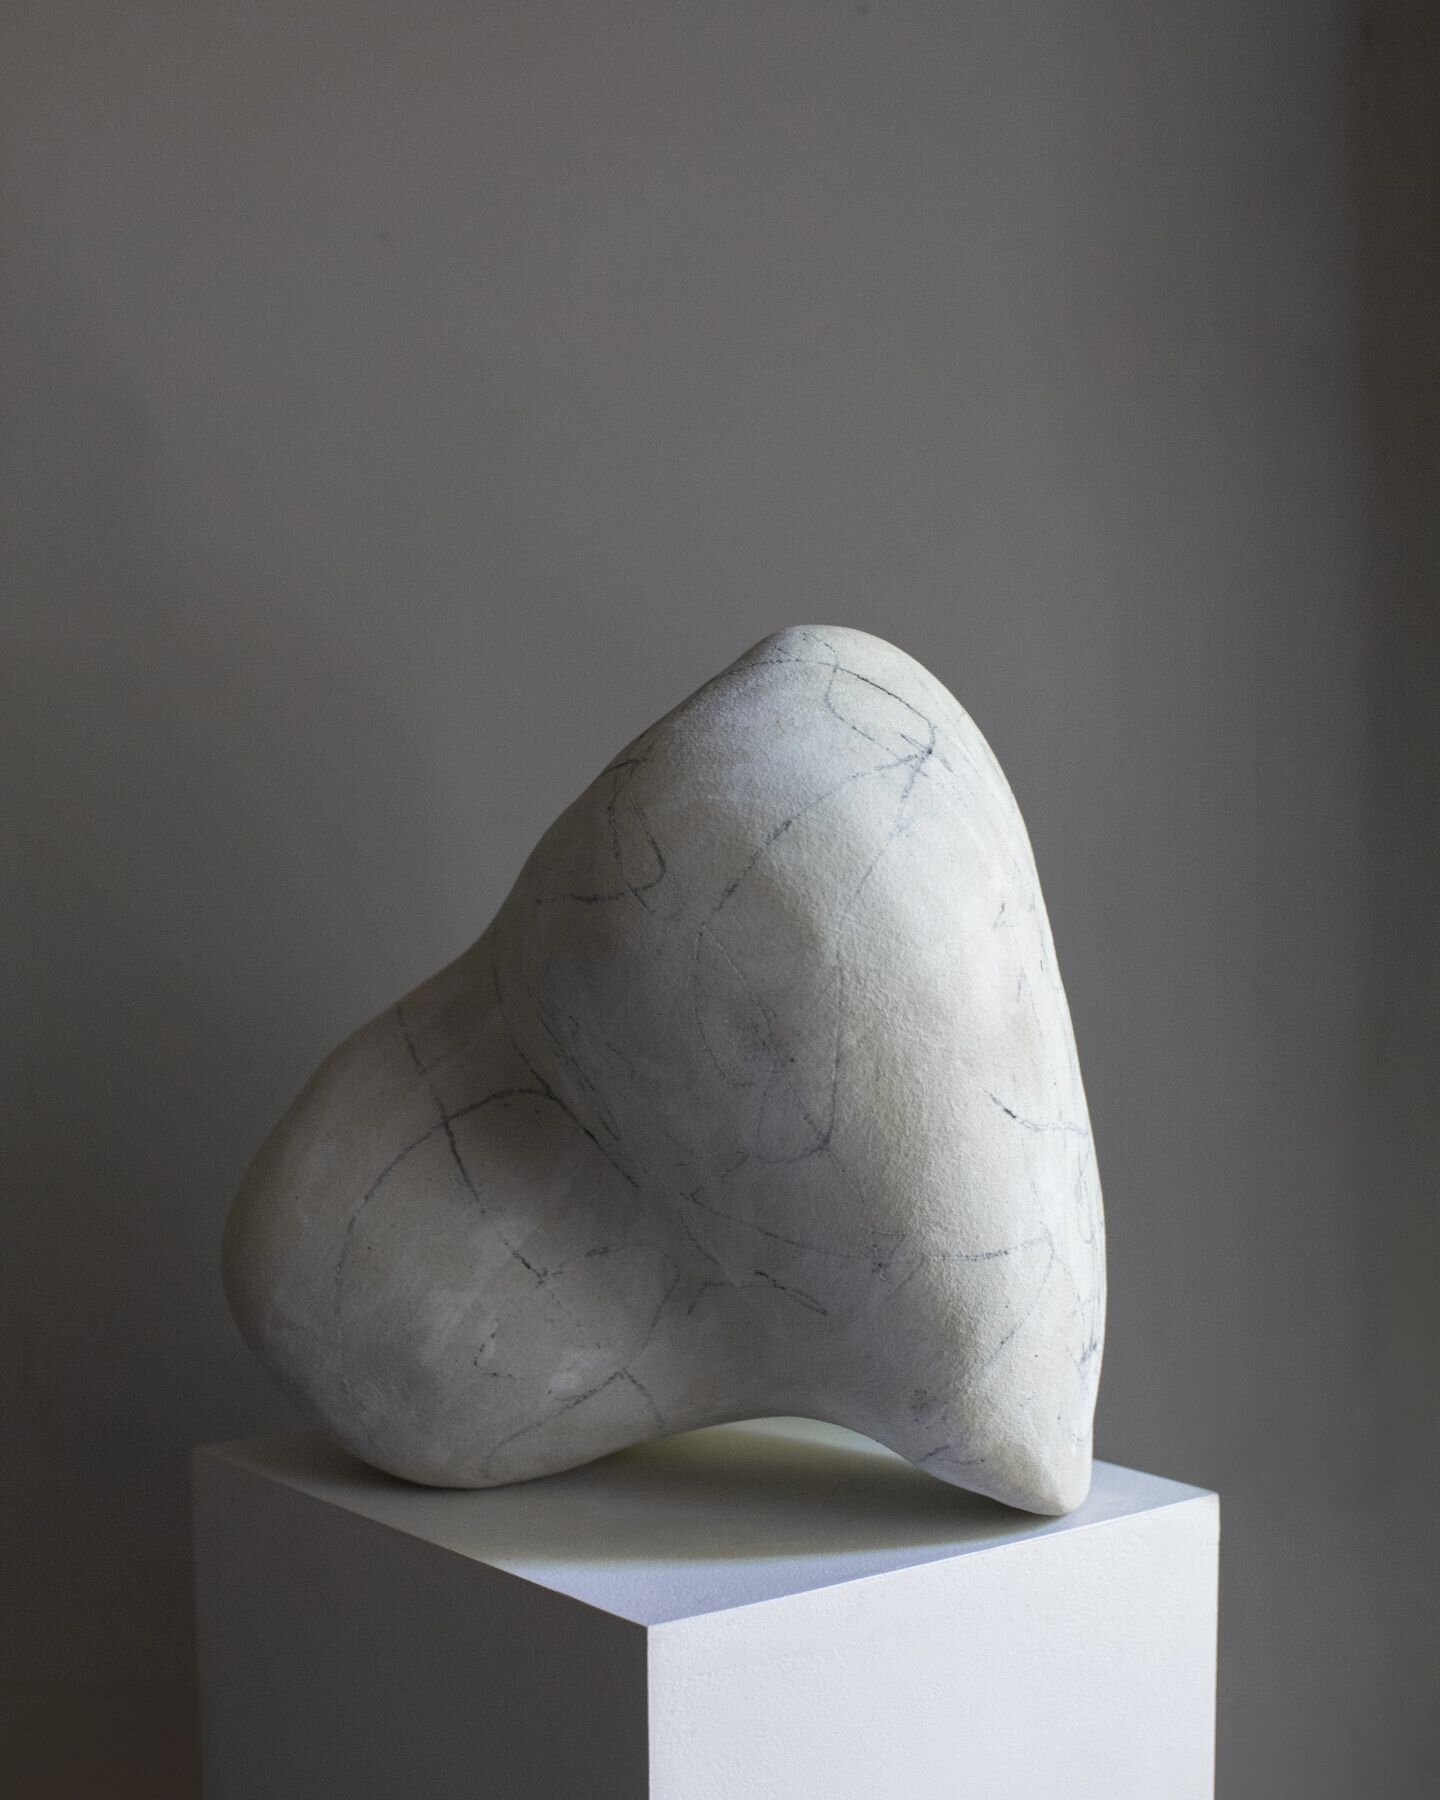 'Notes at midnight'
This  closed sculptural Stoneware piece is available through the beautiful @studiogardner showroom in Sydney.
.
.
.
#ceramics #contemporaryceramics #collectibleceramics #slowdesign #australianceramics